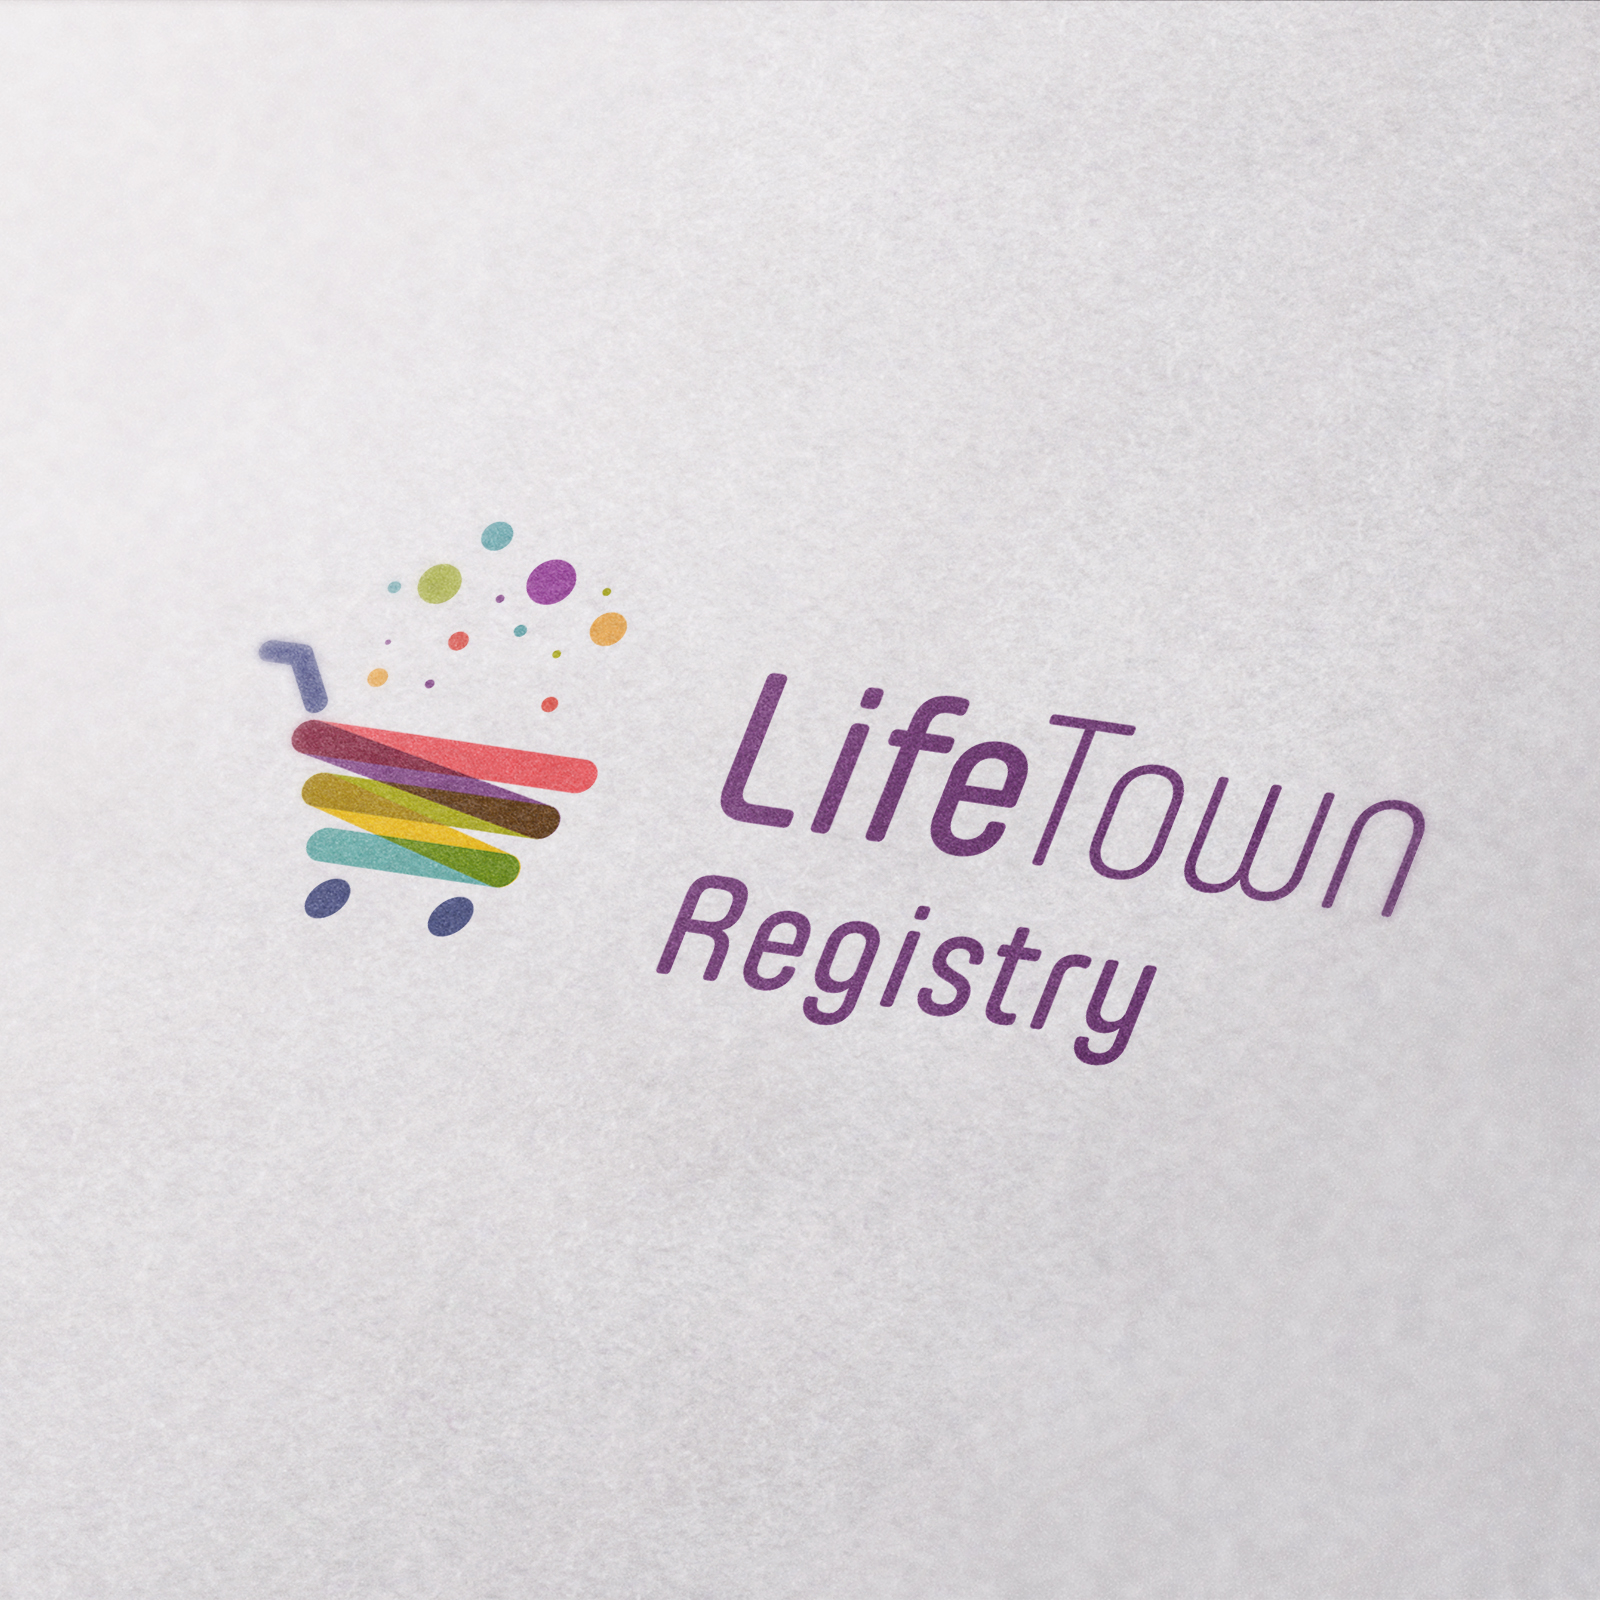 LifeTown Registry